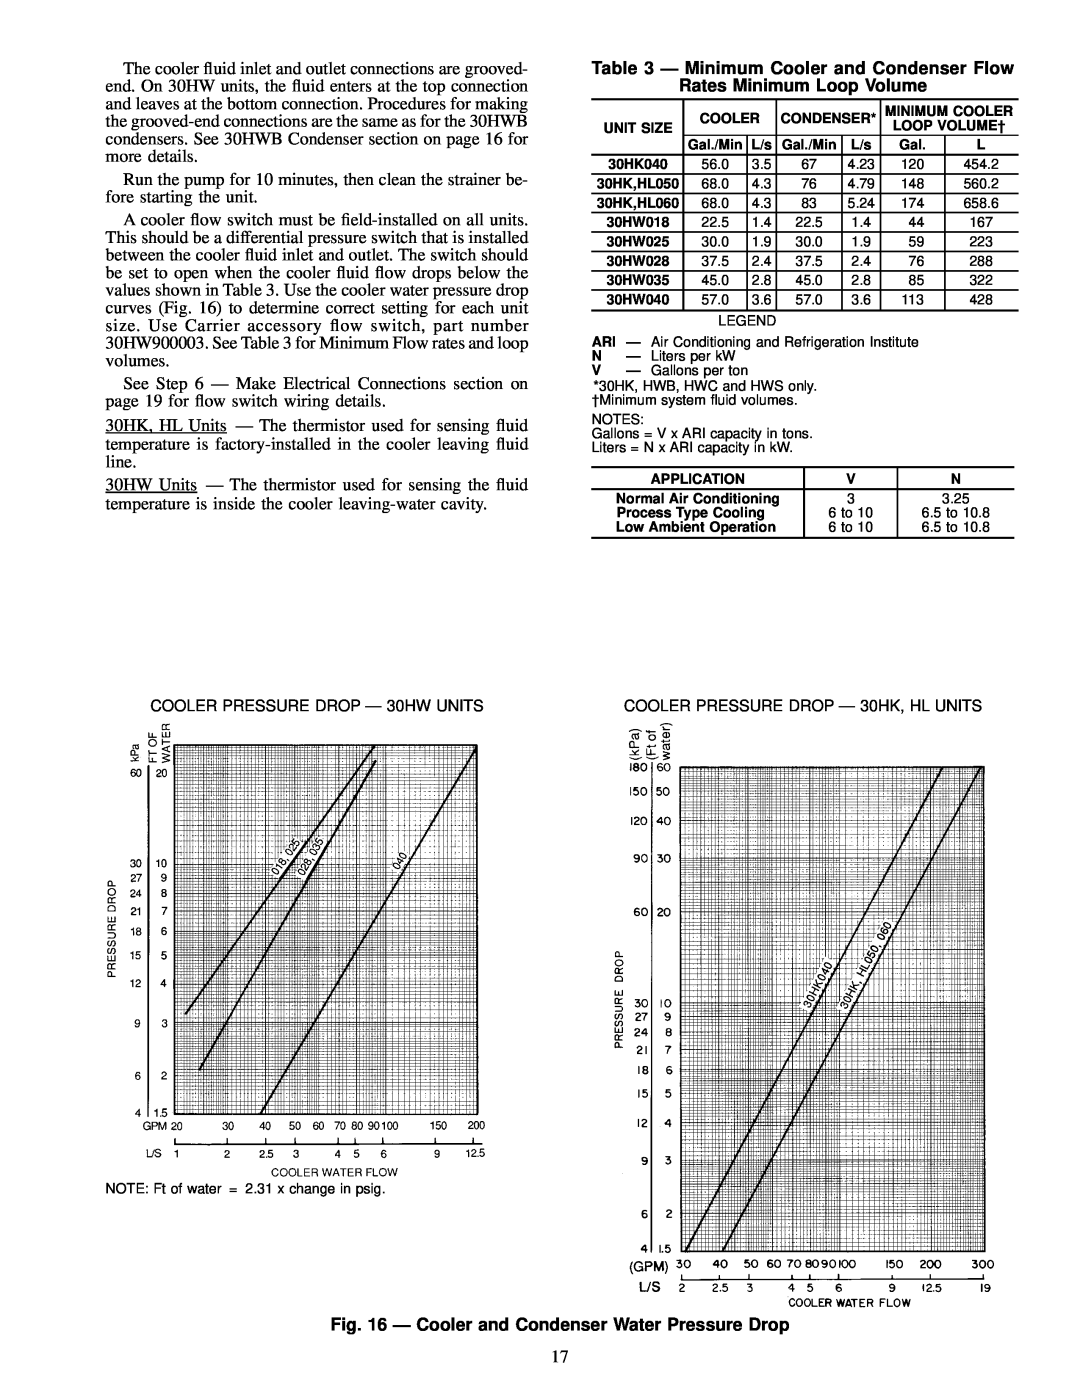 Carrier 30HL050 Ð Minimum Cooler and Condenser Flow Rates Minimum Loop Volume, Ð Cooler and Condenser Water Pressure Drop 